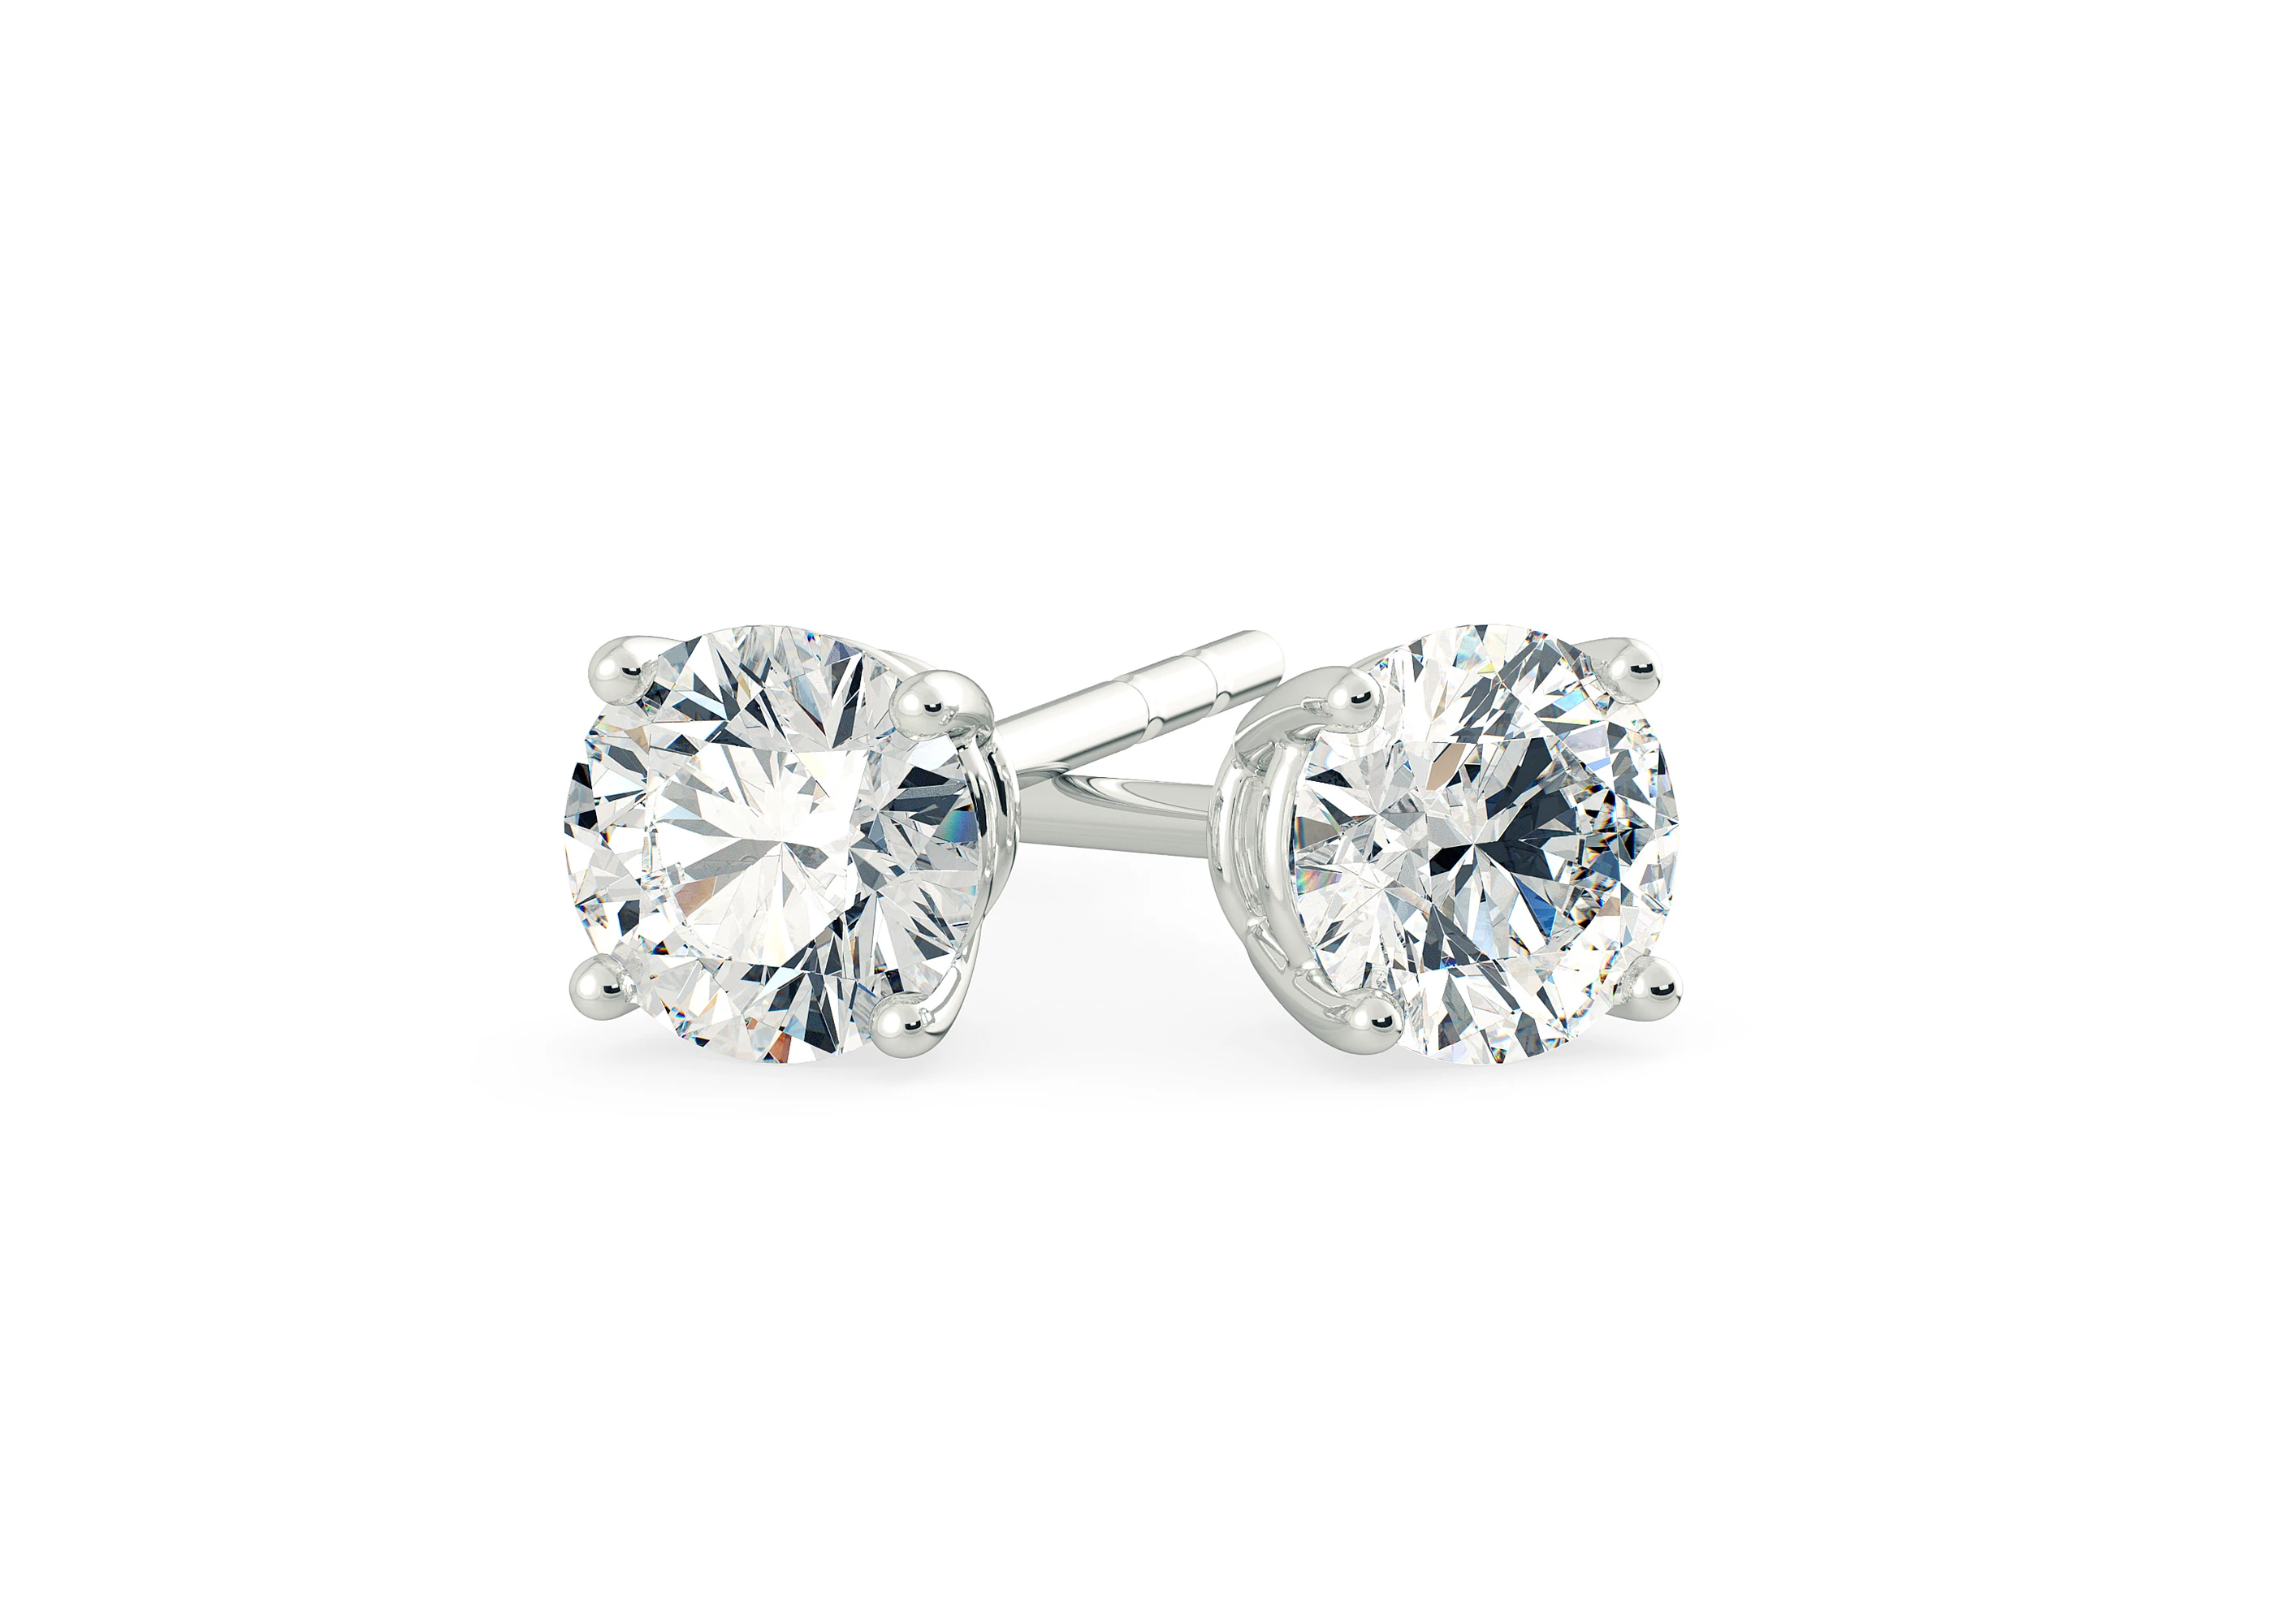 Ettore Round Brilliant Diamond Stud Earrings in 18K White Gold with Screw Backs